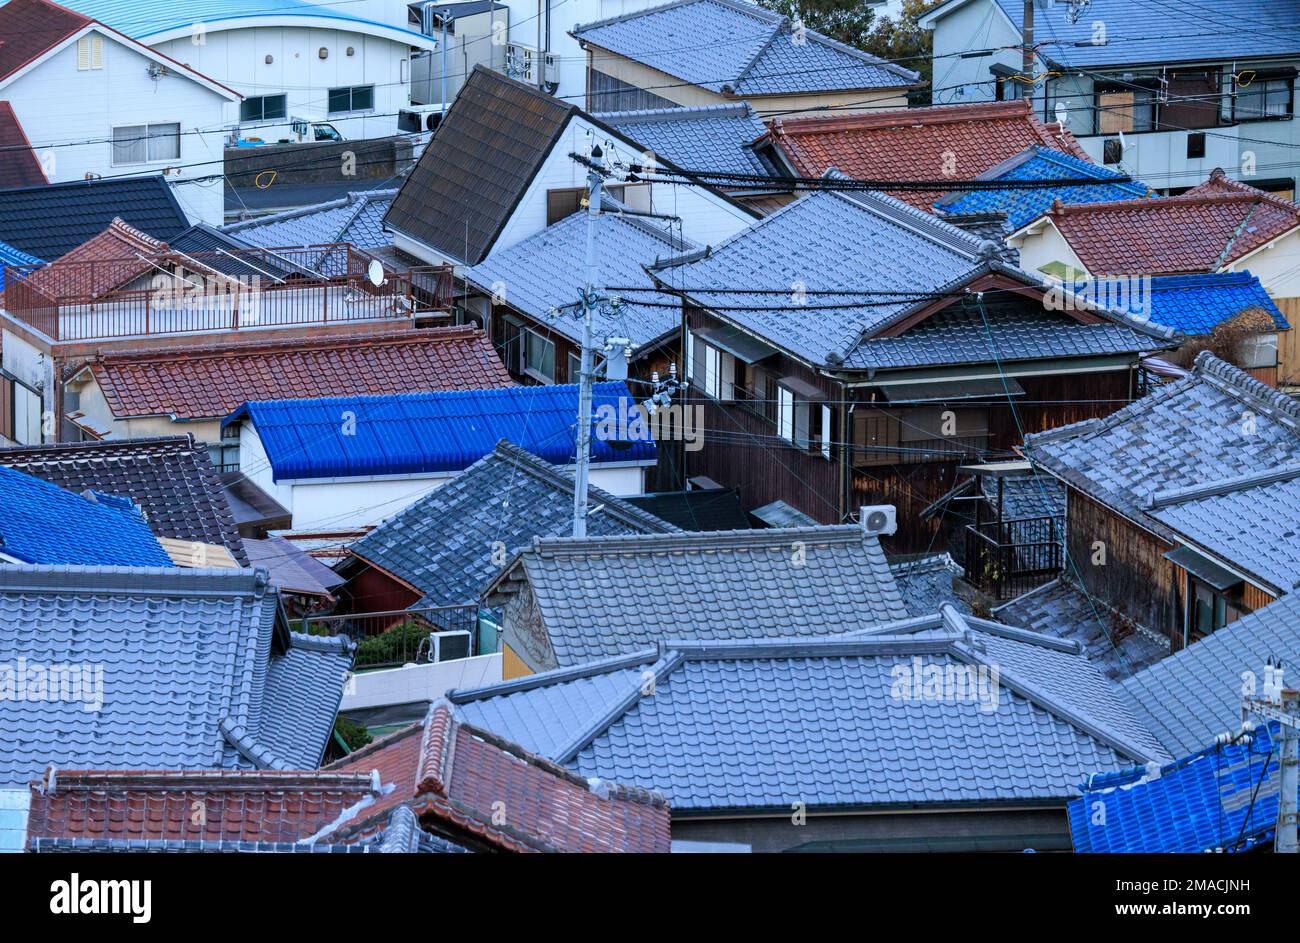 Tiled Roofs on Houses of Dense Residential Neighborhood in Japanese Town Stock Photo